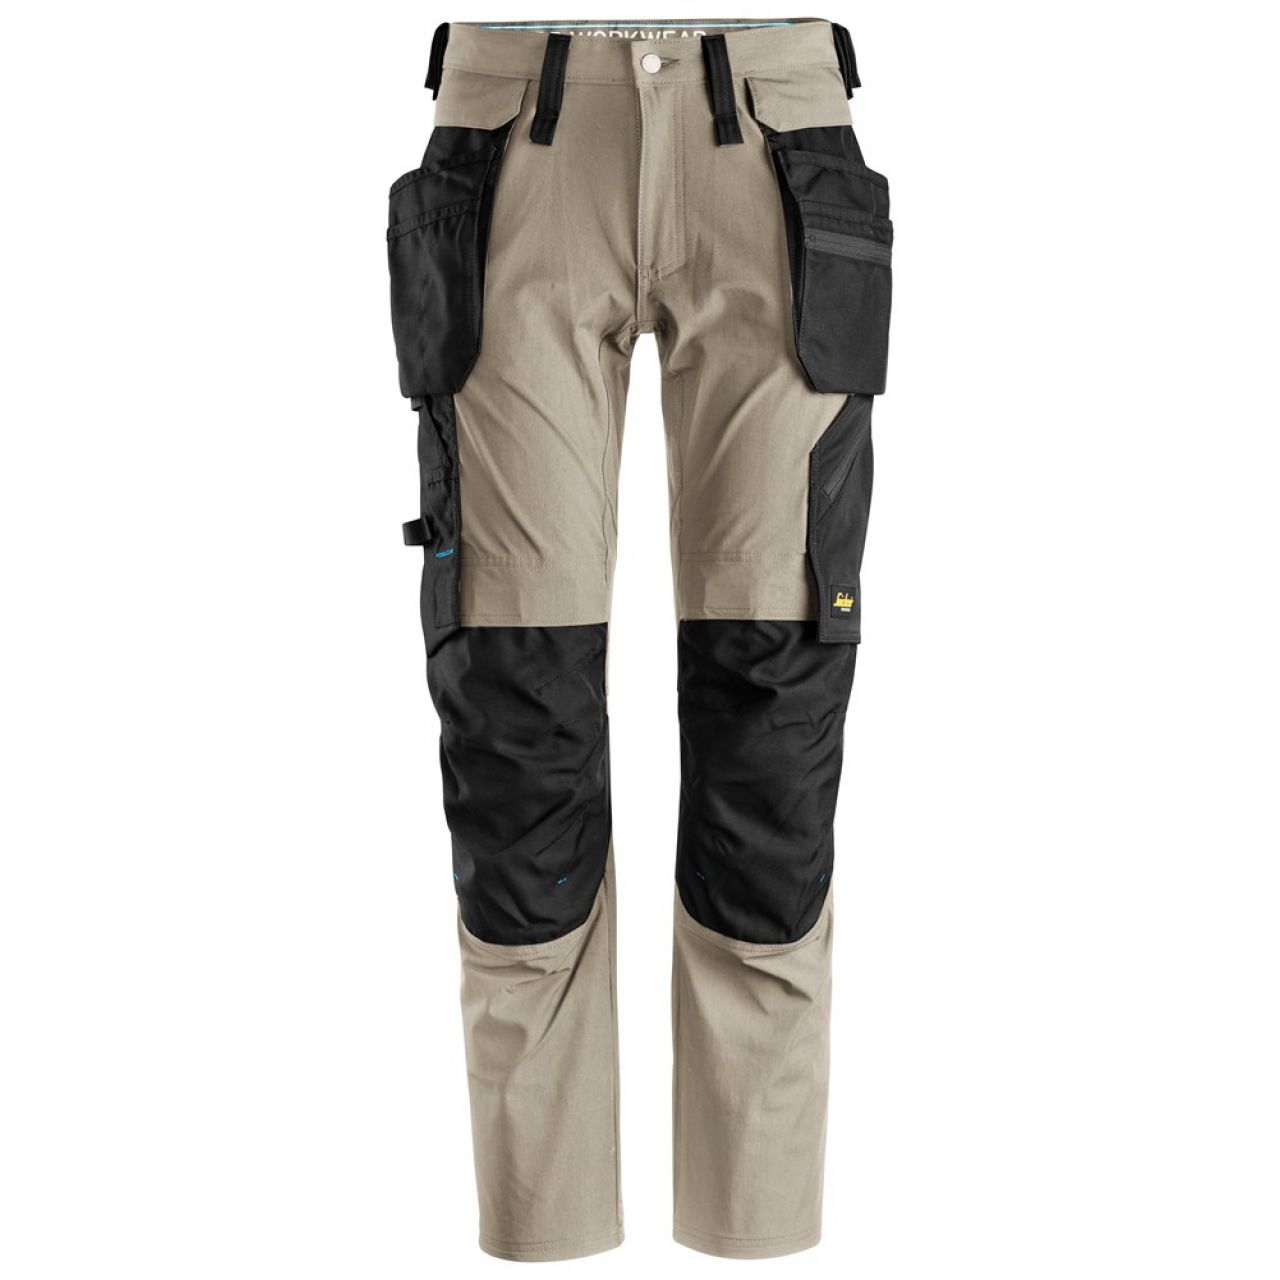 6208 Pantalones largos de trabajo con bolsillos flotantes desmontables LiteWork beige-negro talla 116